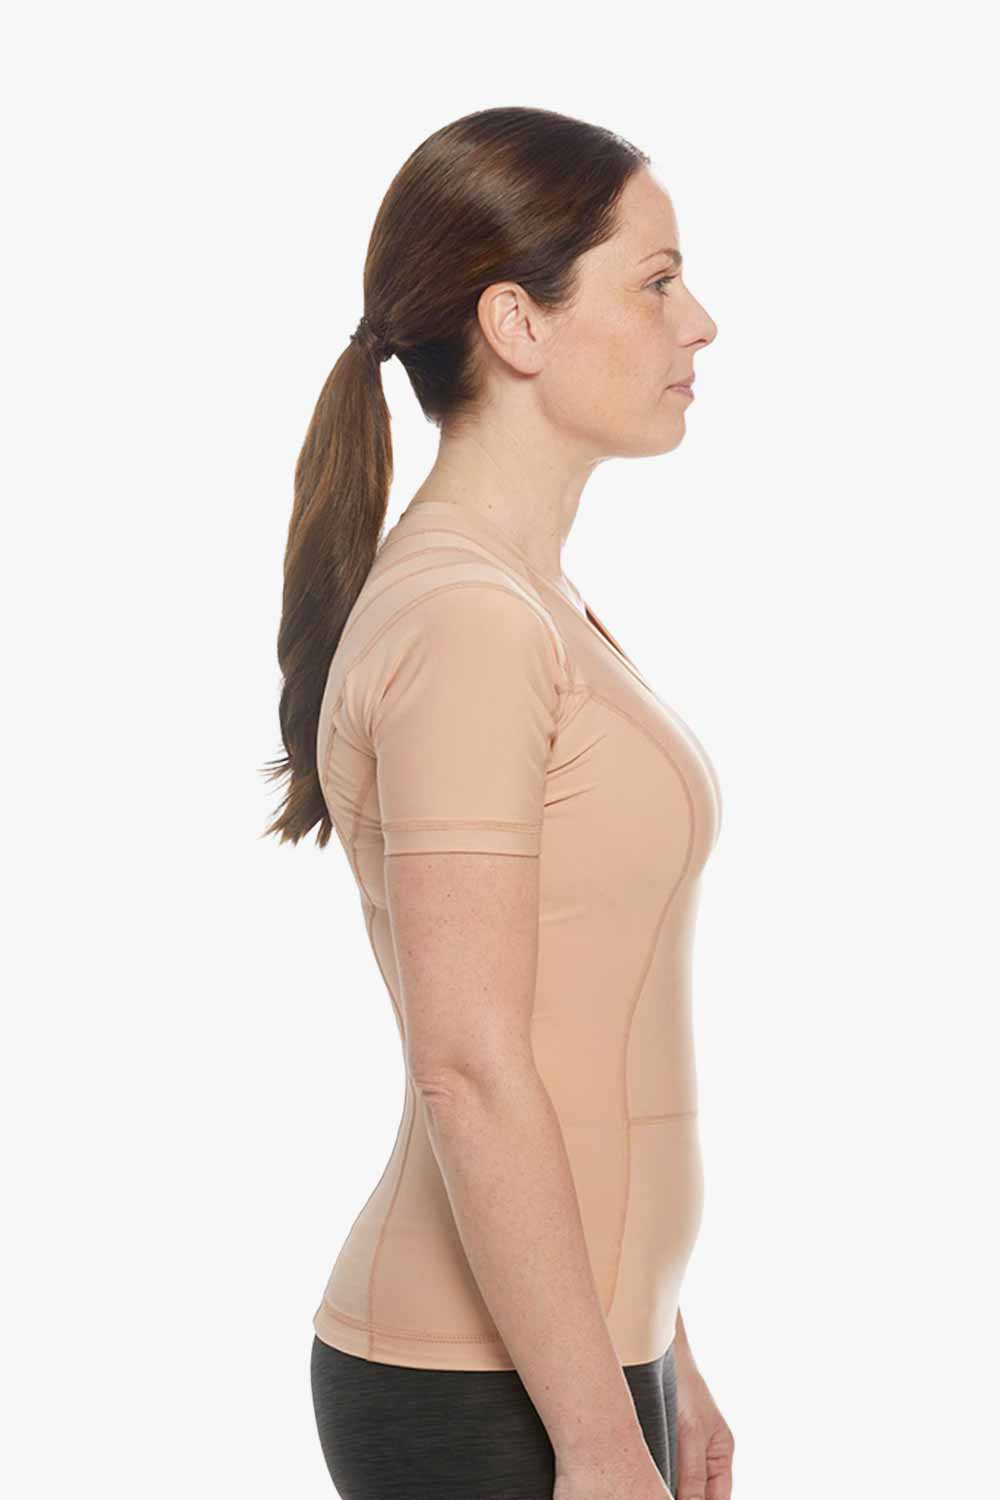 DEMO | Women's Posture Shirt™ - Nude